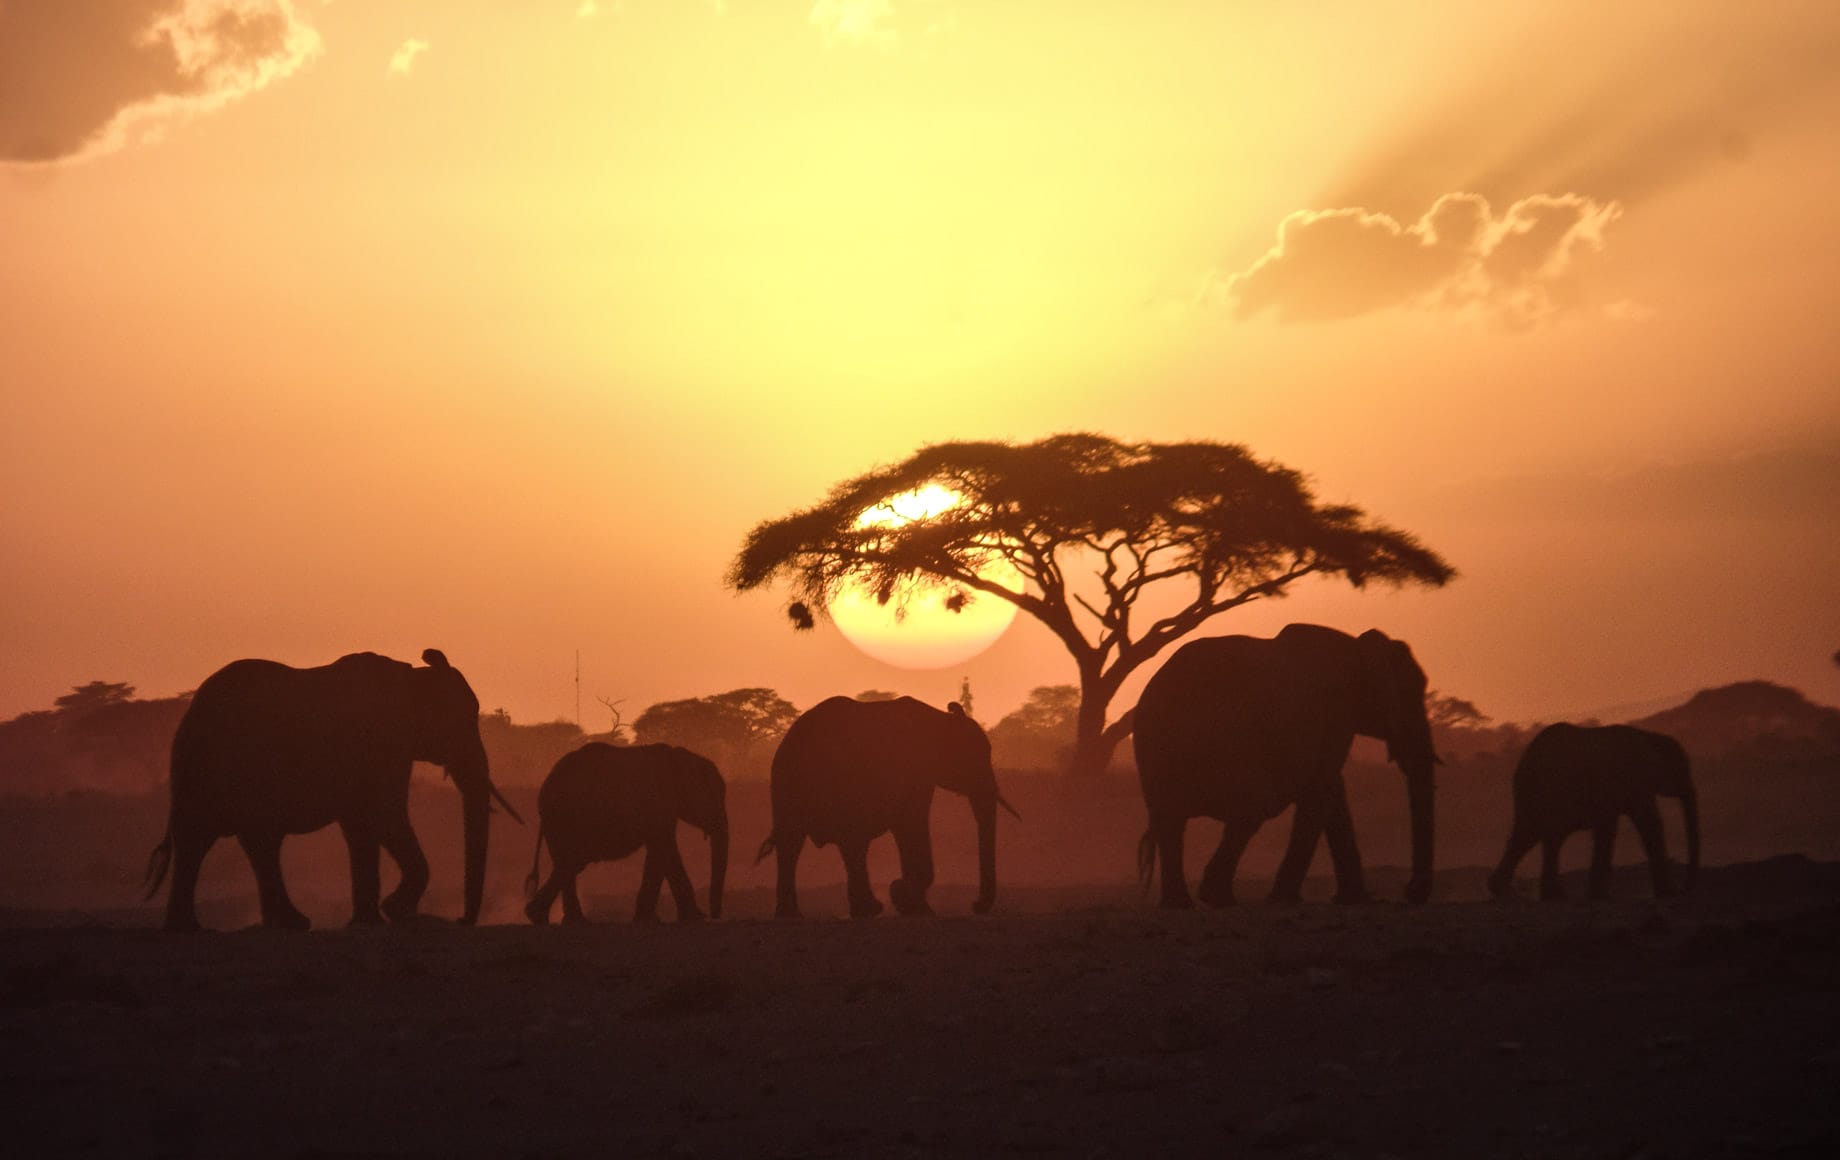 Amboseli National Park - Elephants group roaming arounf